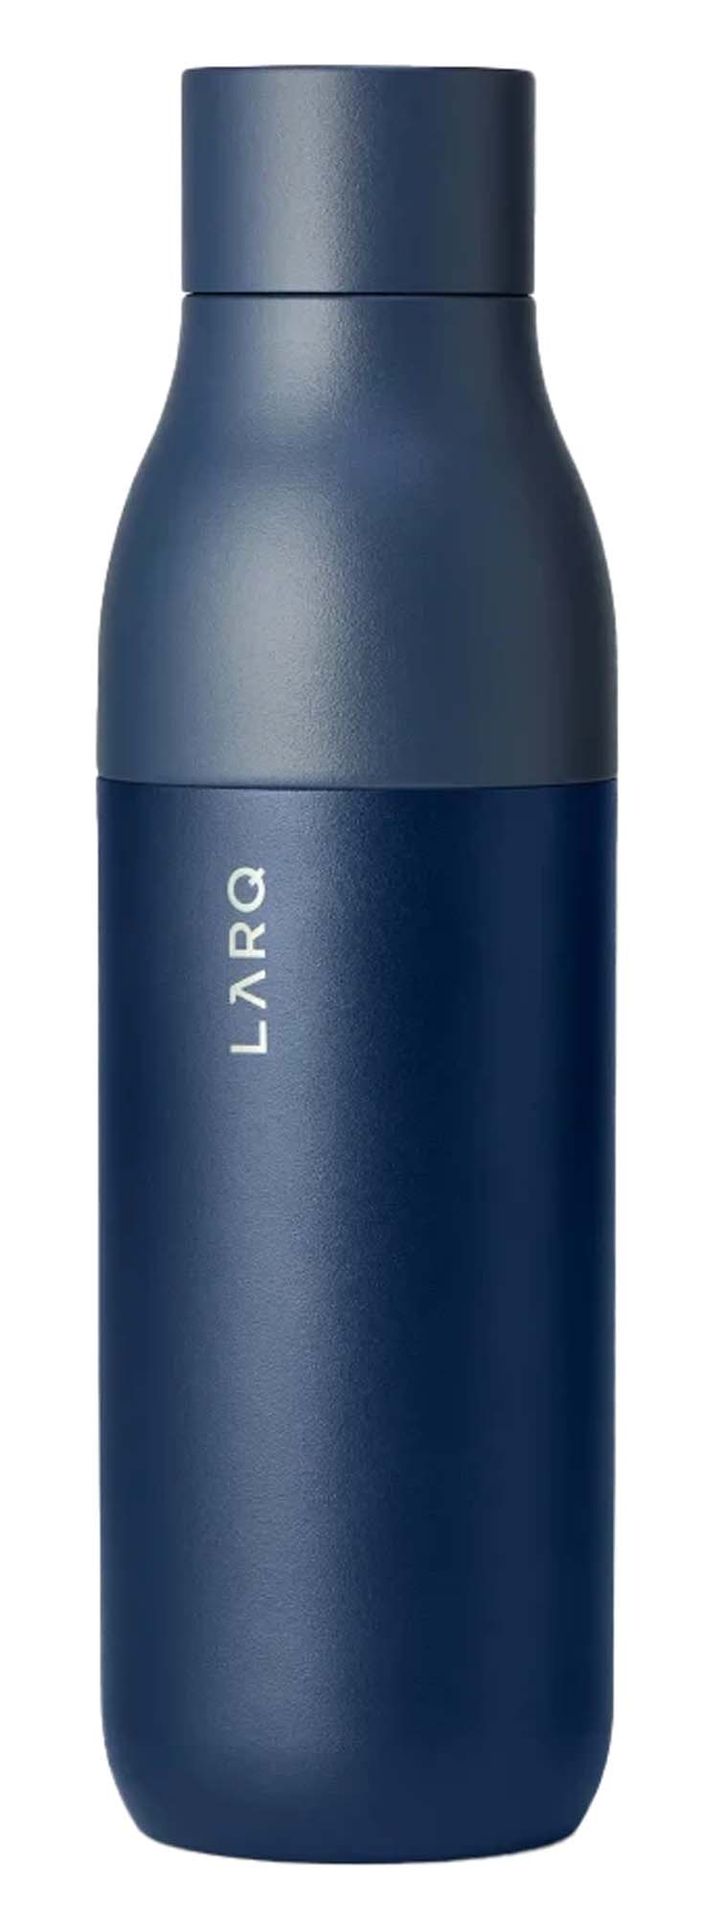 LARQ Bottle PureVis™ 500ml Monaco Blue LARQ